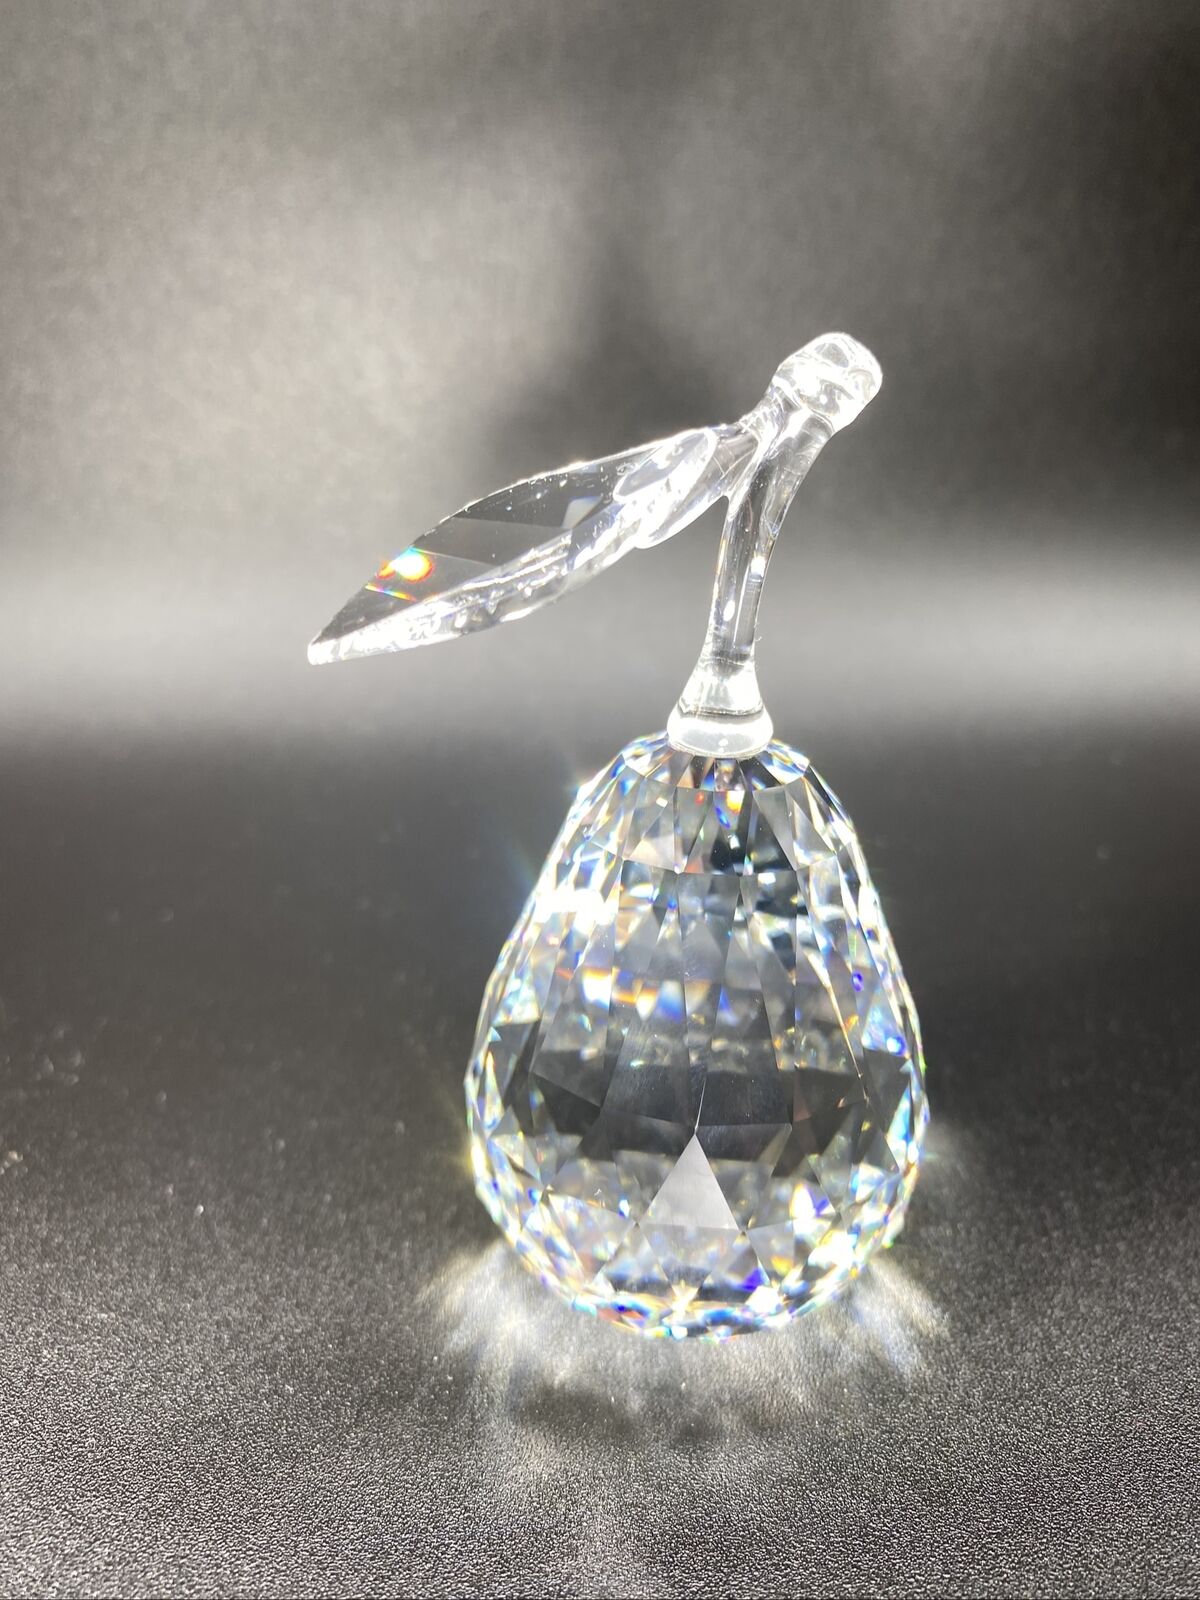 Swarovski Crystal Figurine, Pear, (162885) 3.5" No Box/COA